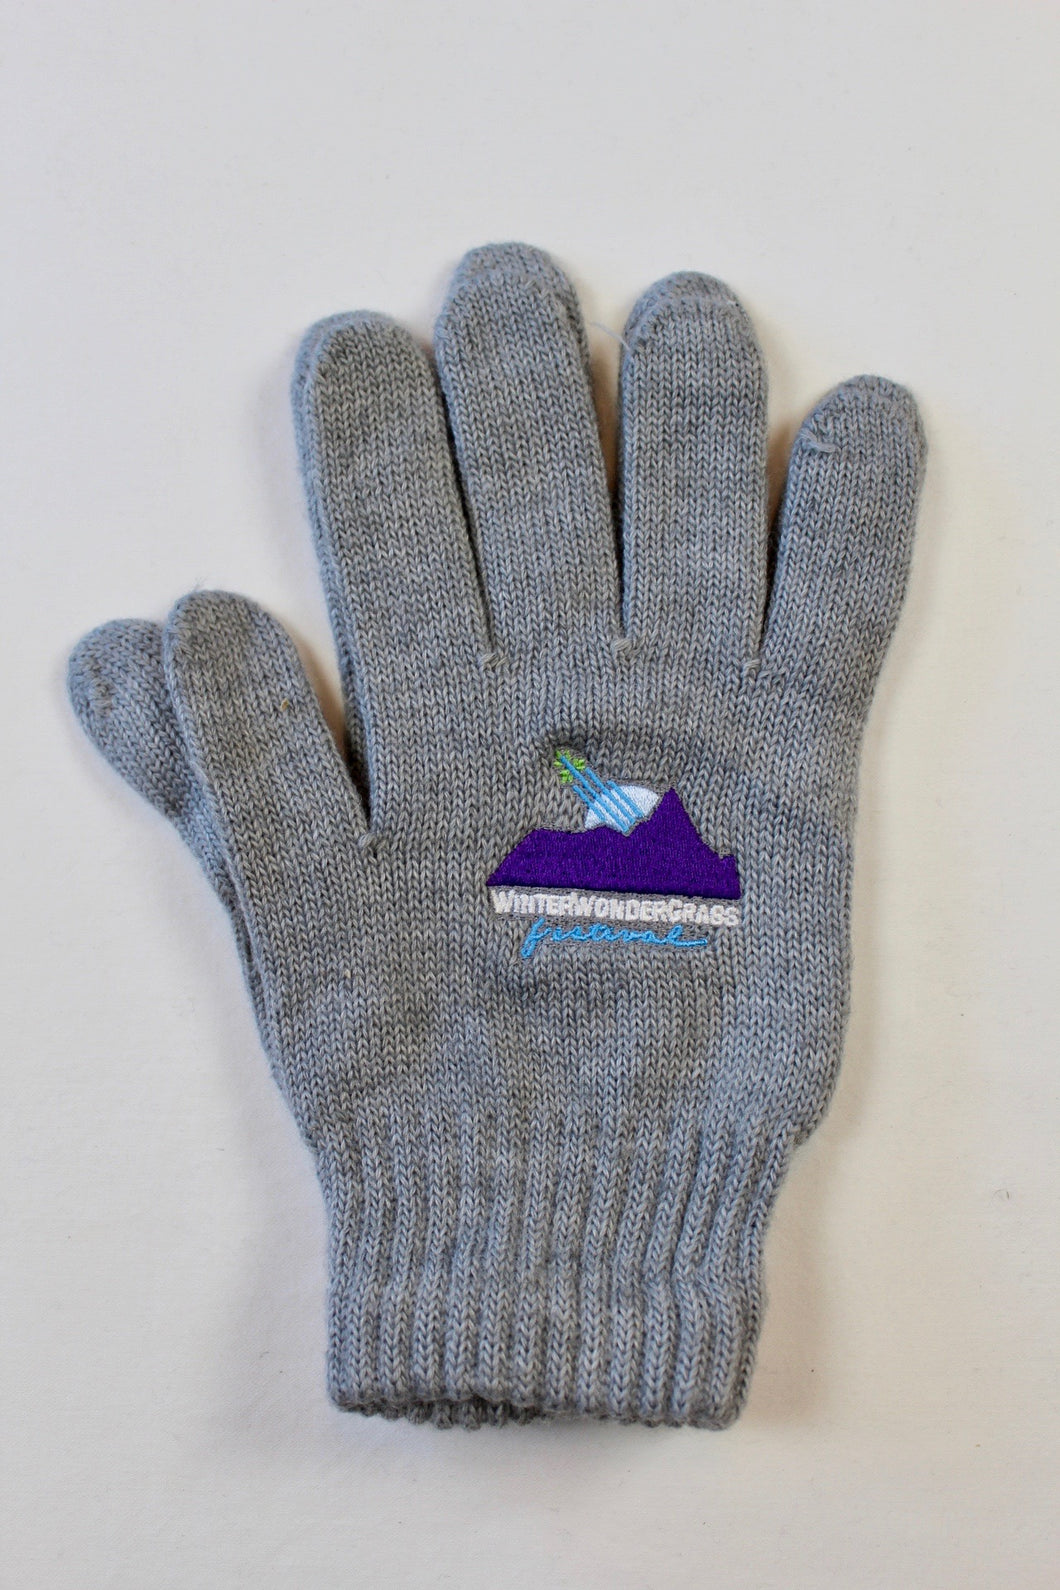 Knit Gloves - WinterWonderGrass Light Weight Gloves